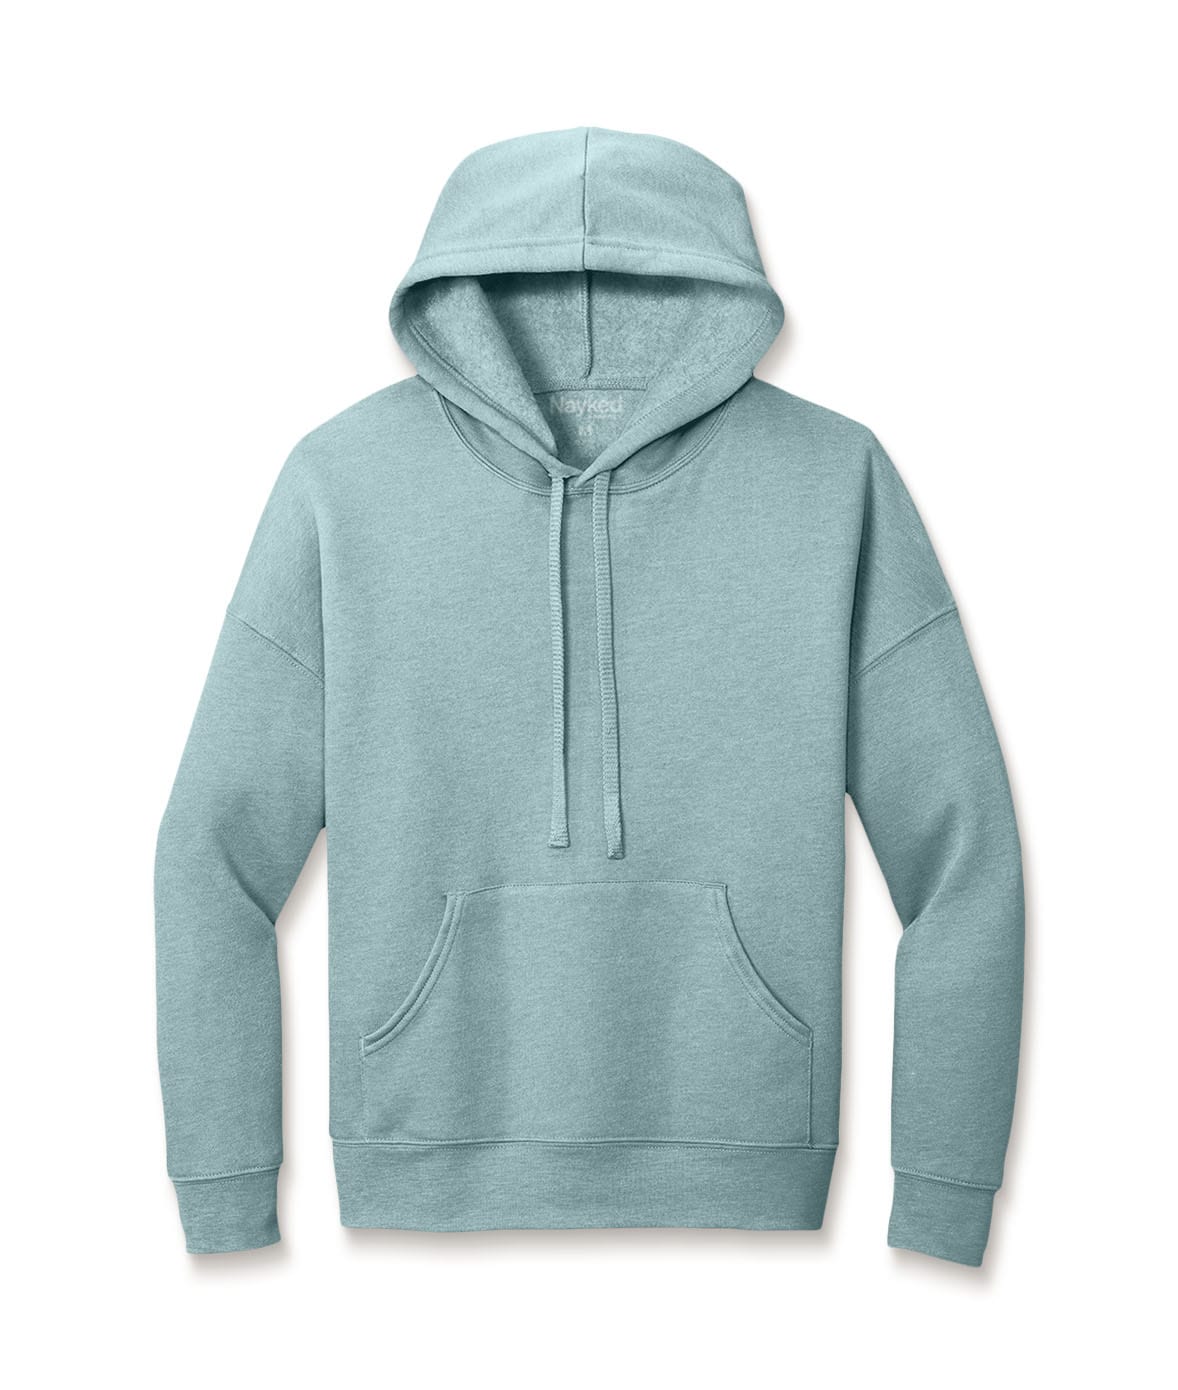 Legend Hoodie - Men's Premium 450gm Heavyweight Cross-Grain Hooded Pullover  Sweatshirt - Independent Trading Company